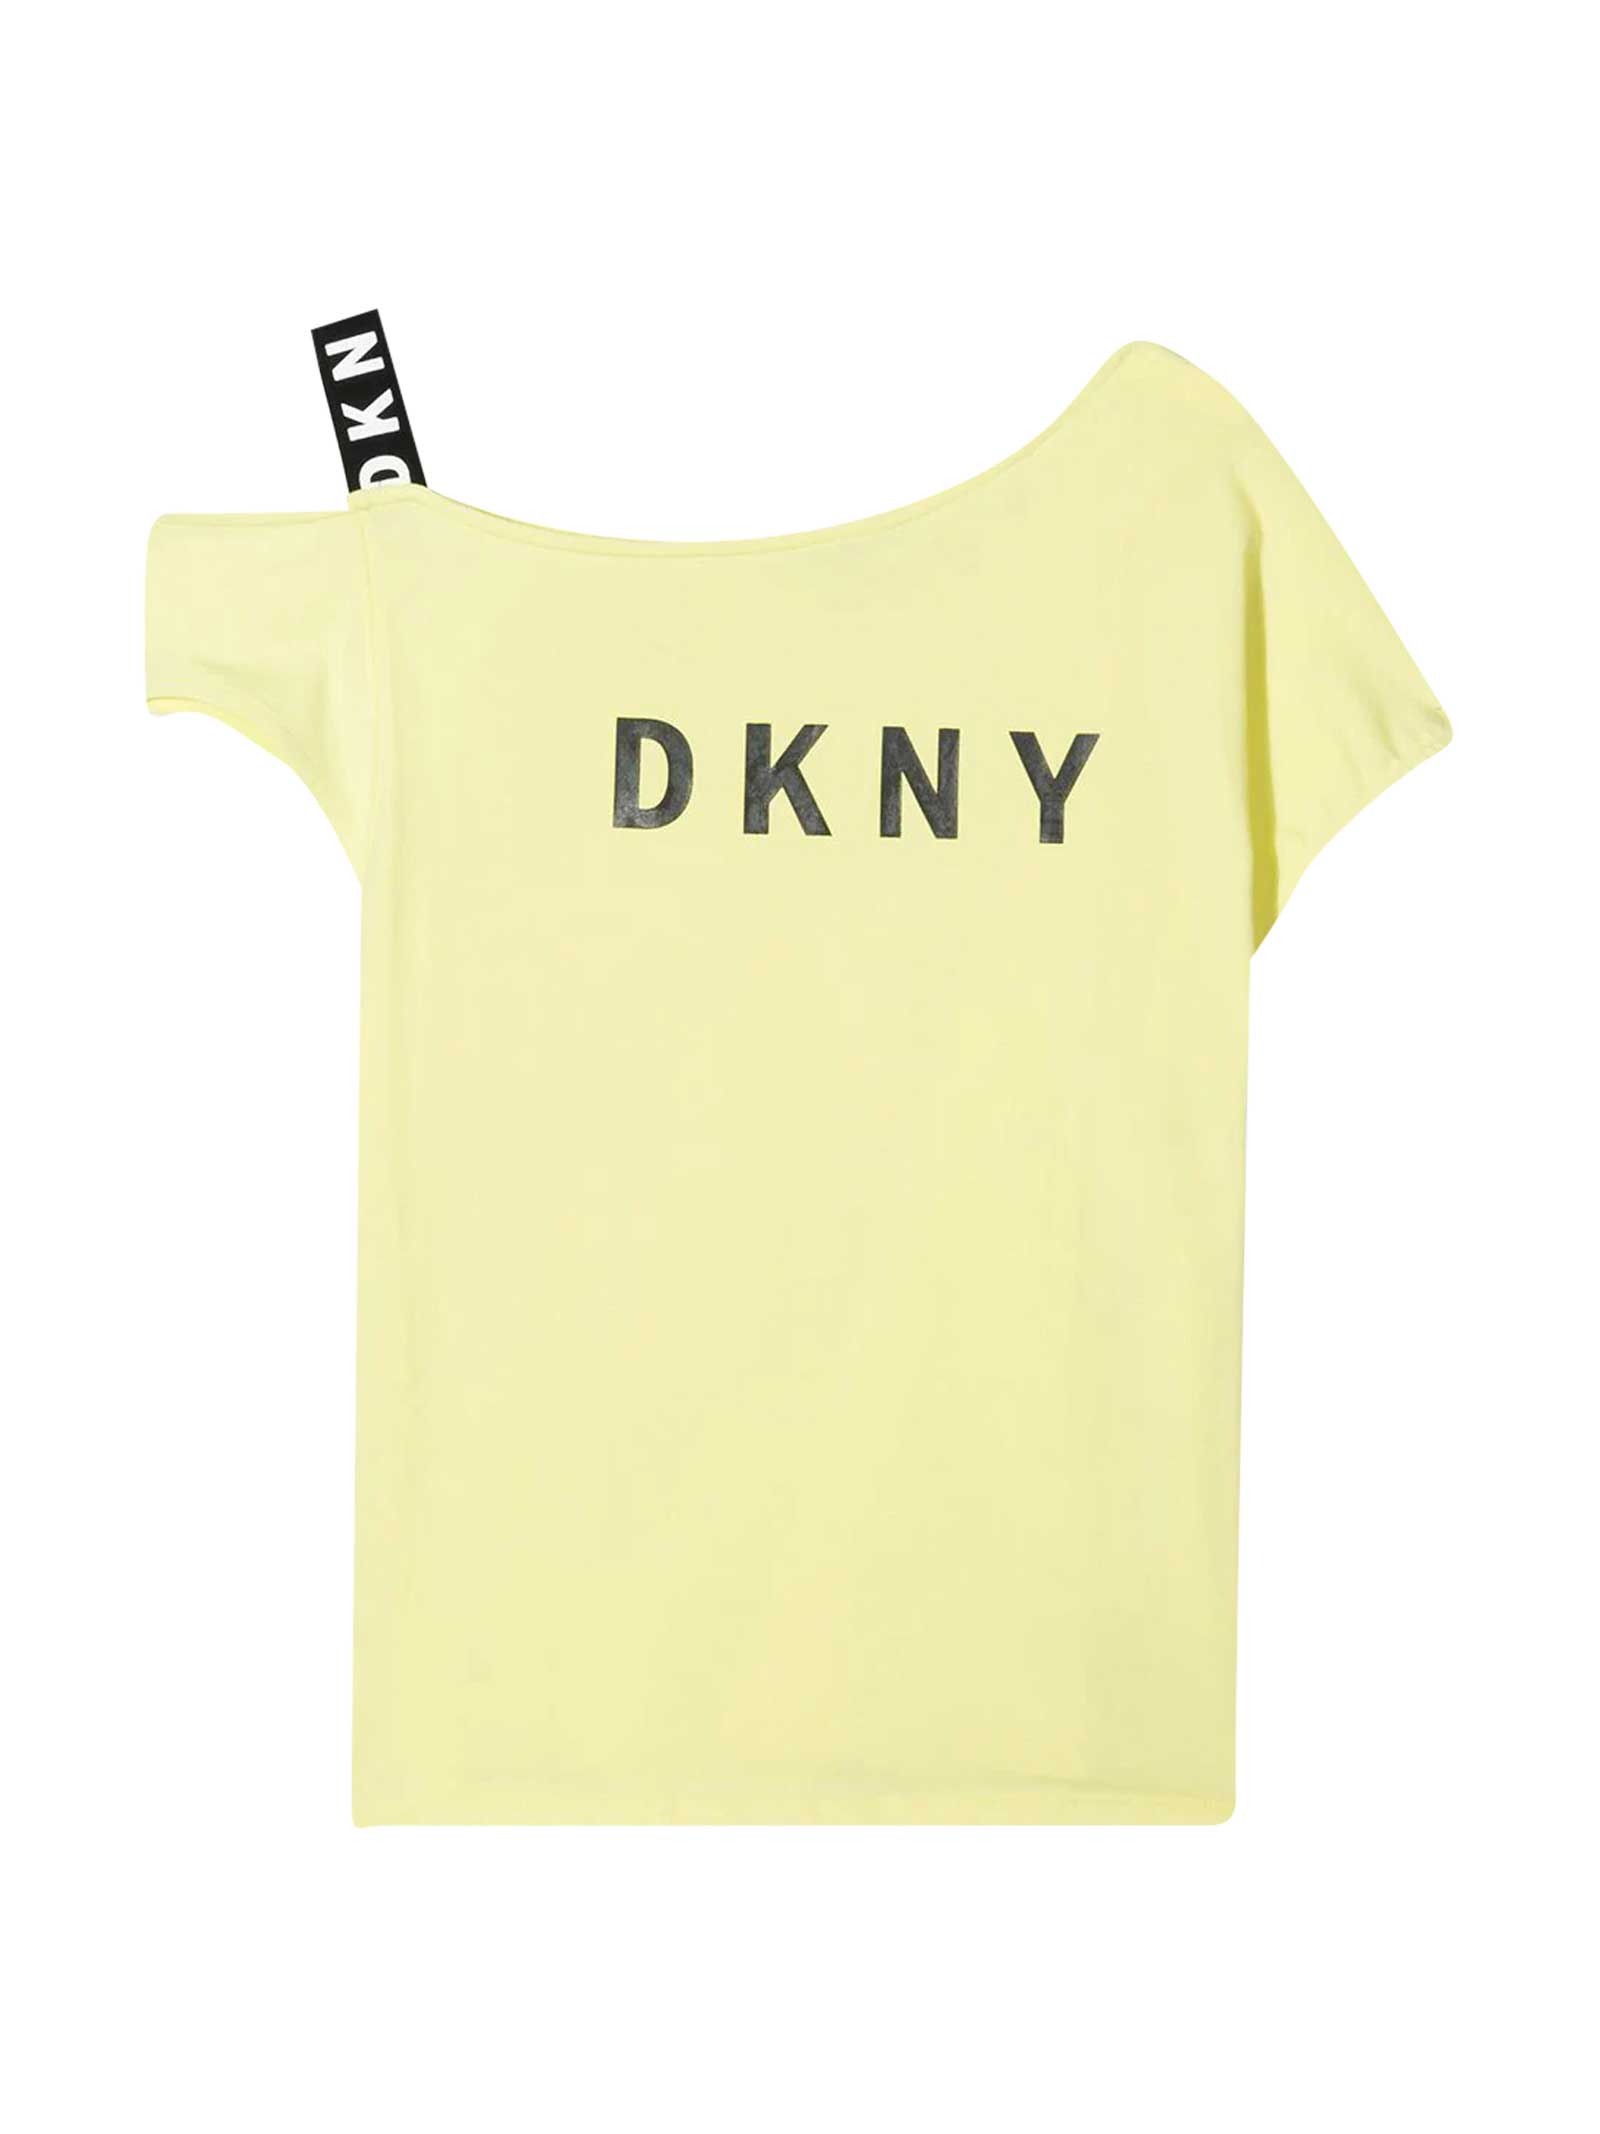 DKNY Yellow T-shirt